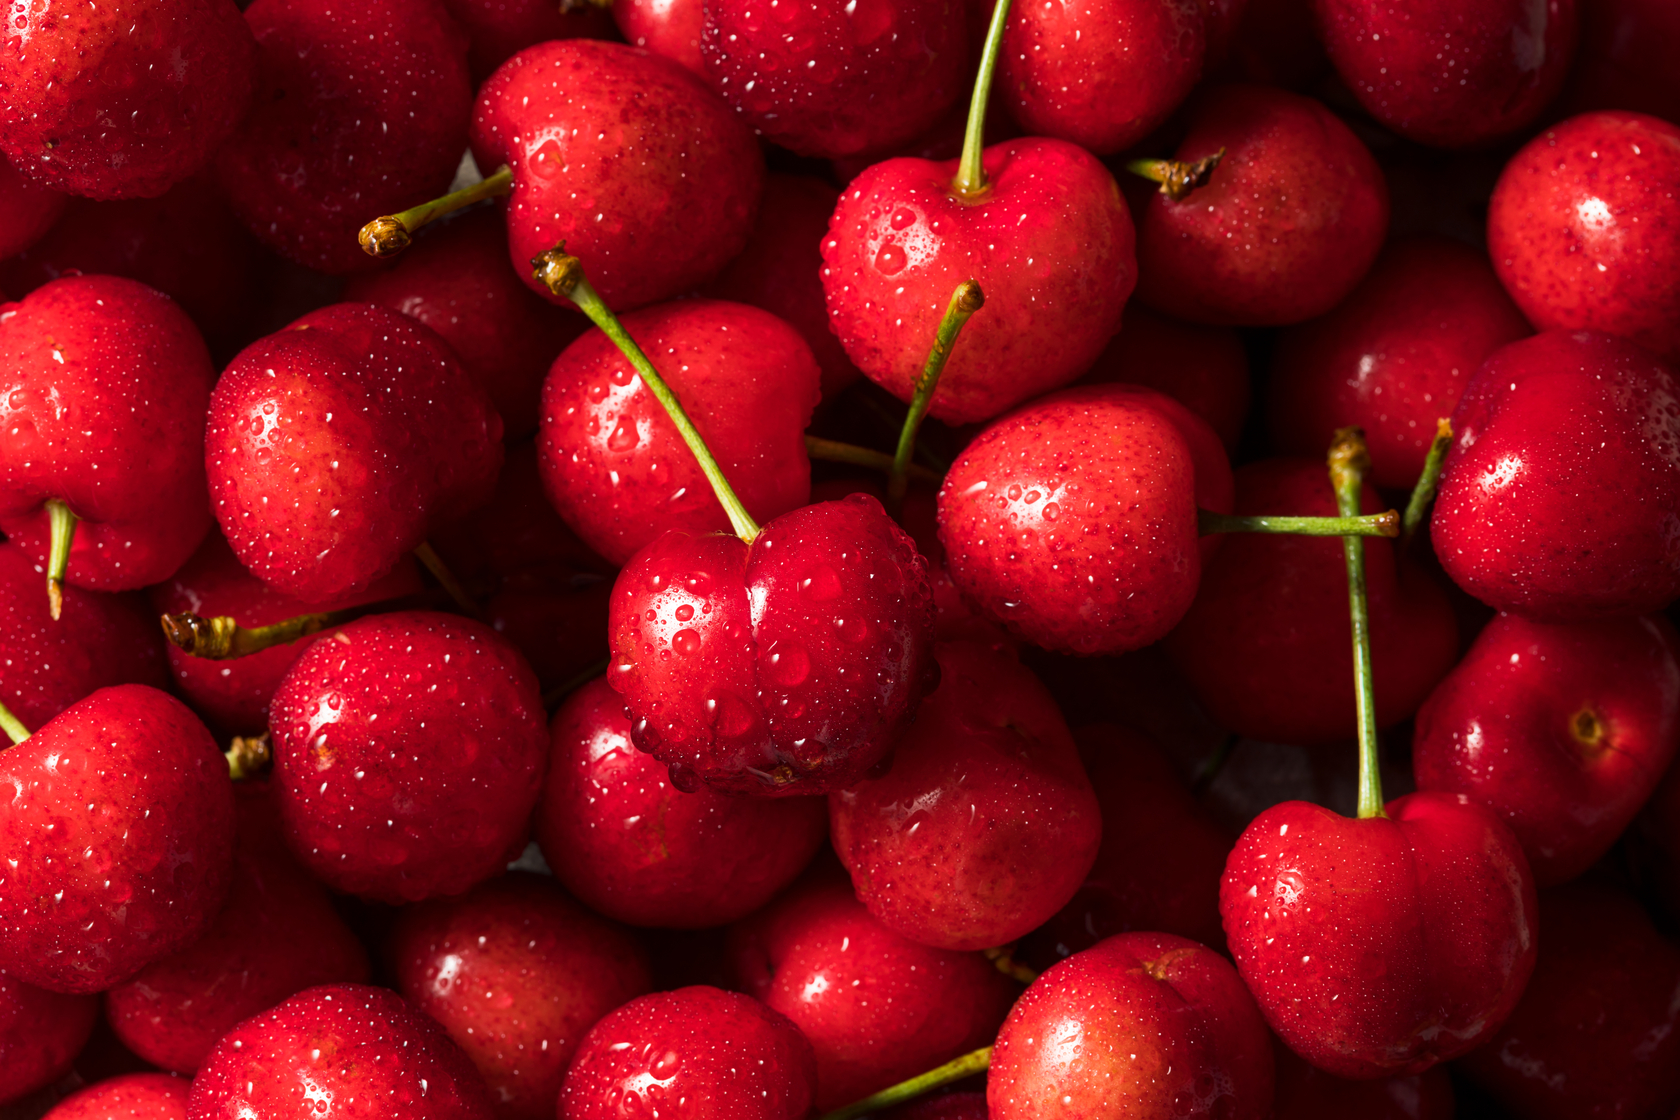 Raw,Red,Organic,Cherries,Ready,To,Eat